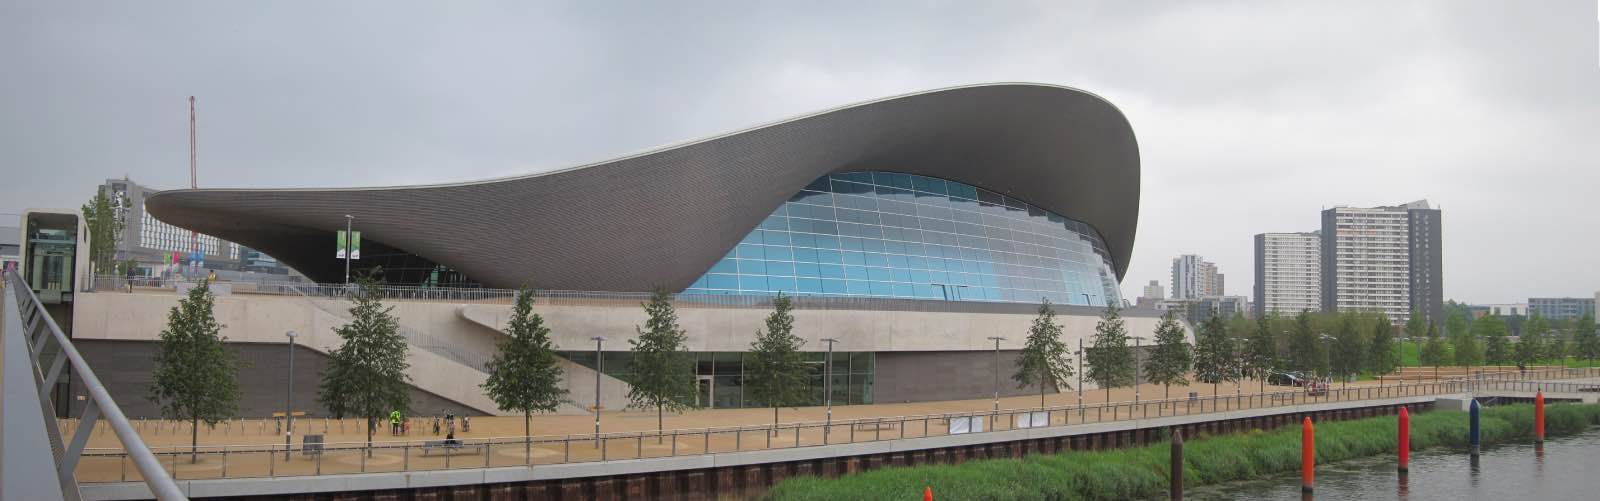 Centro Acuático de Londres, obra de Zaha Hadid Architects, arquitectura contemporánea